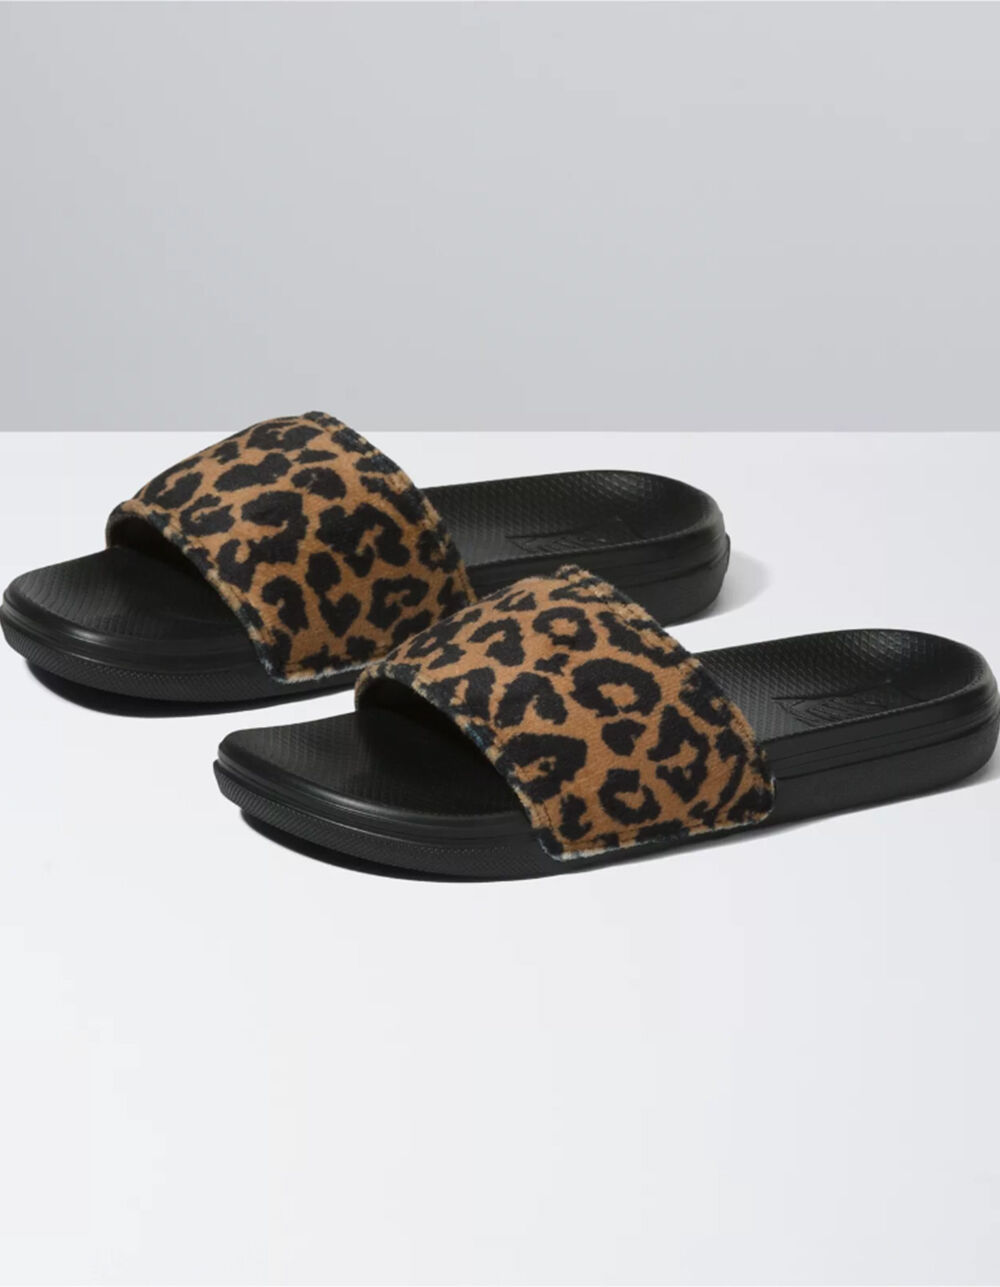 VANS Leopard Fur La Costa Girls Slide Sandals - LEOPARD | Tillys